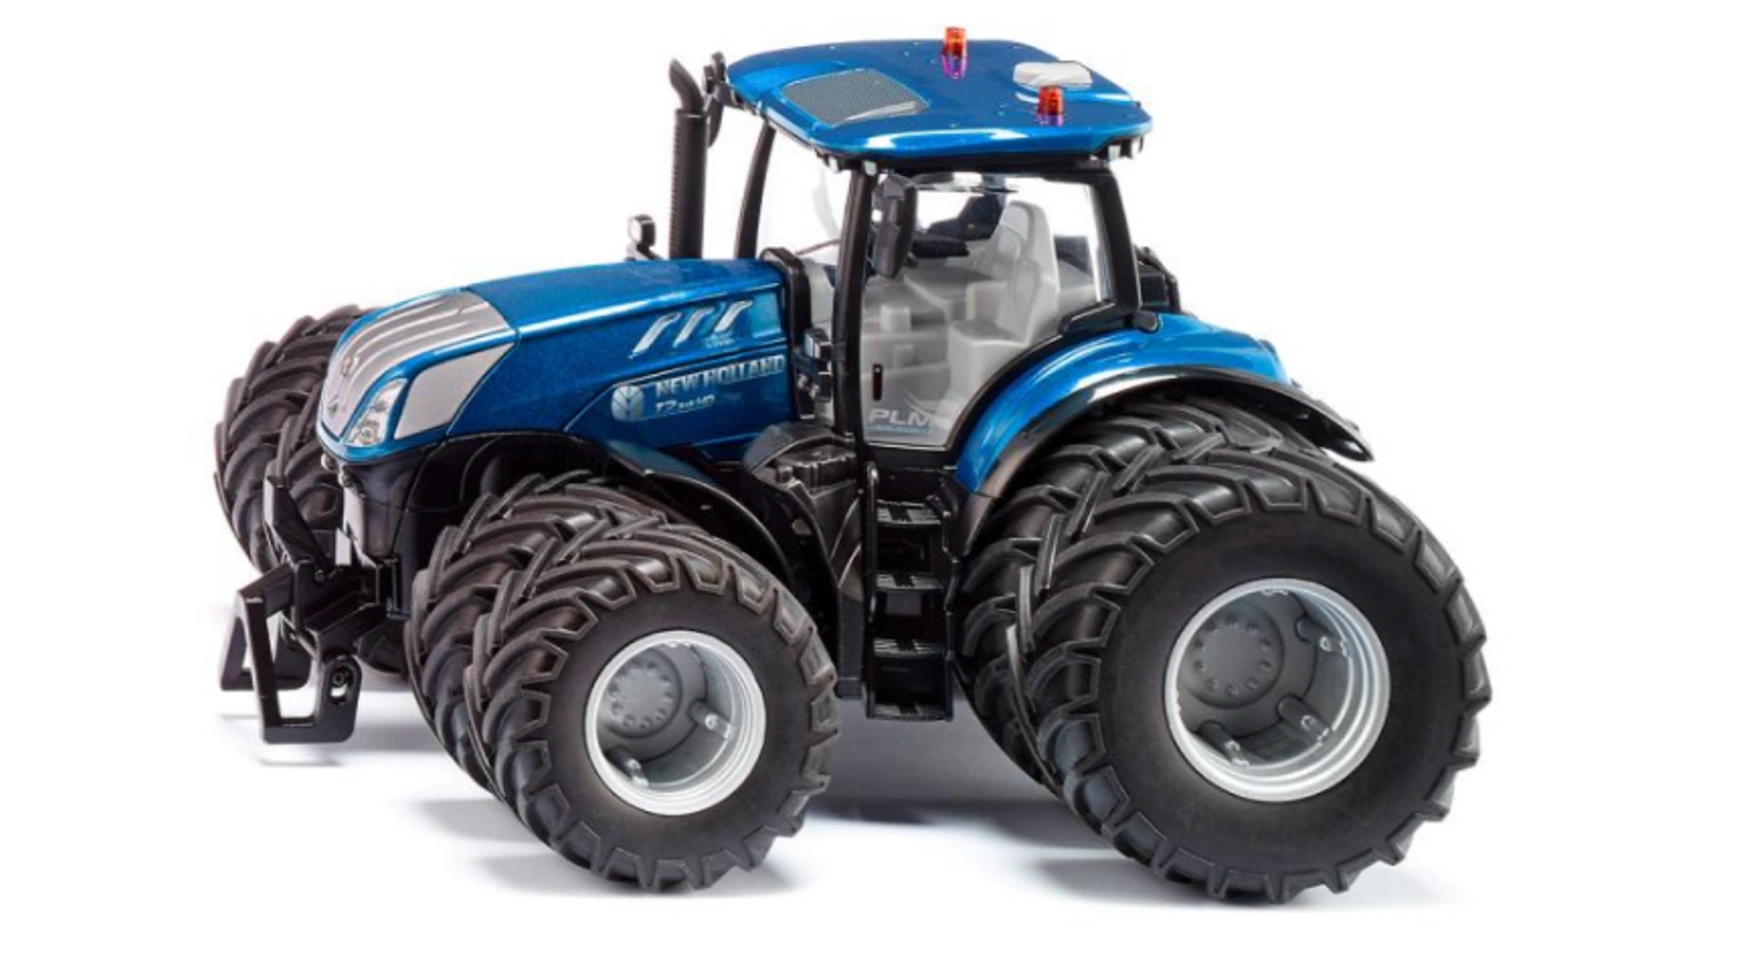 Control new holland t7315 с двойными шинами и bluetooth Siku bburago модель трактора farm tractor new holland t7 315 1 32 синий